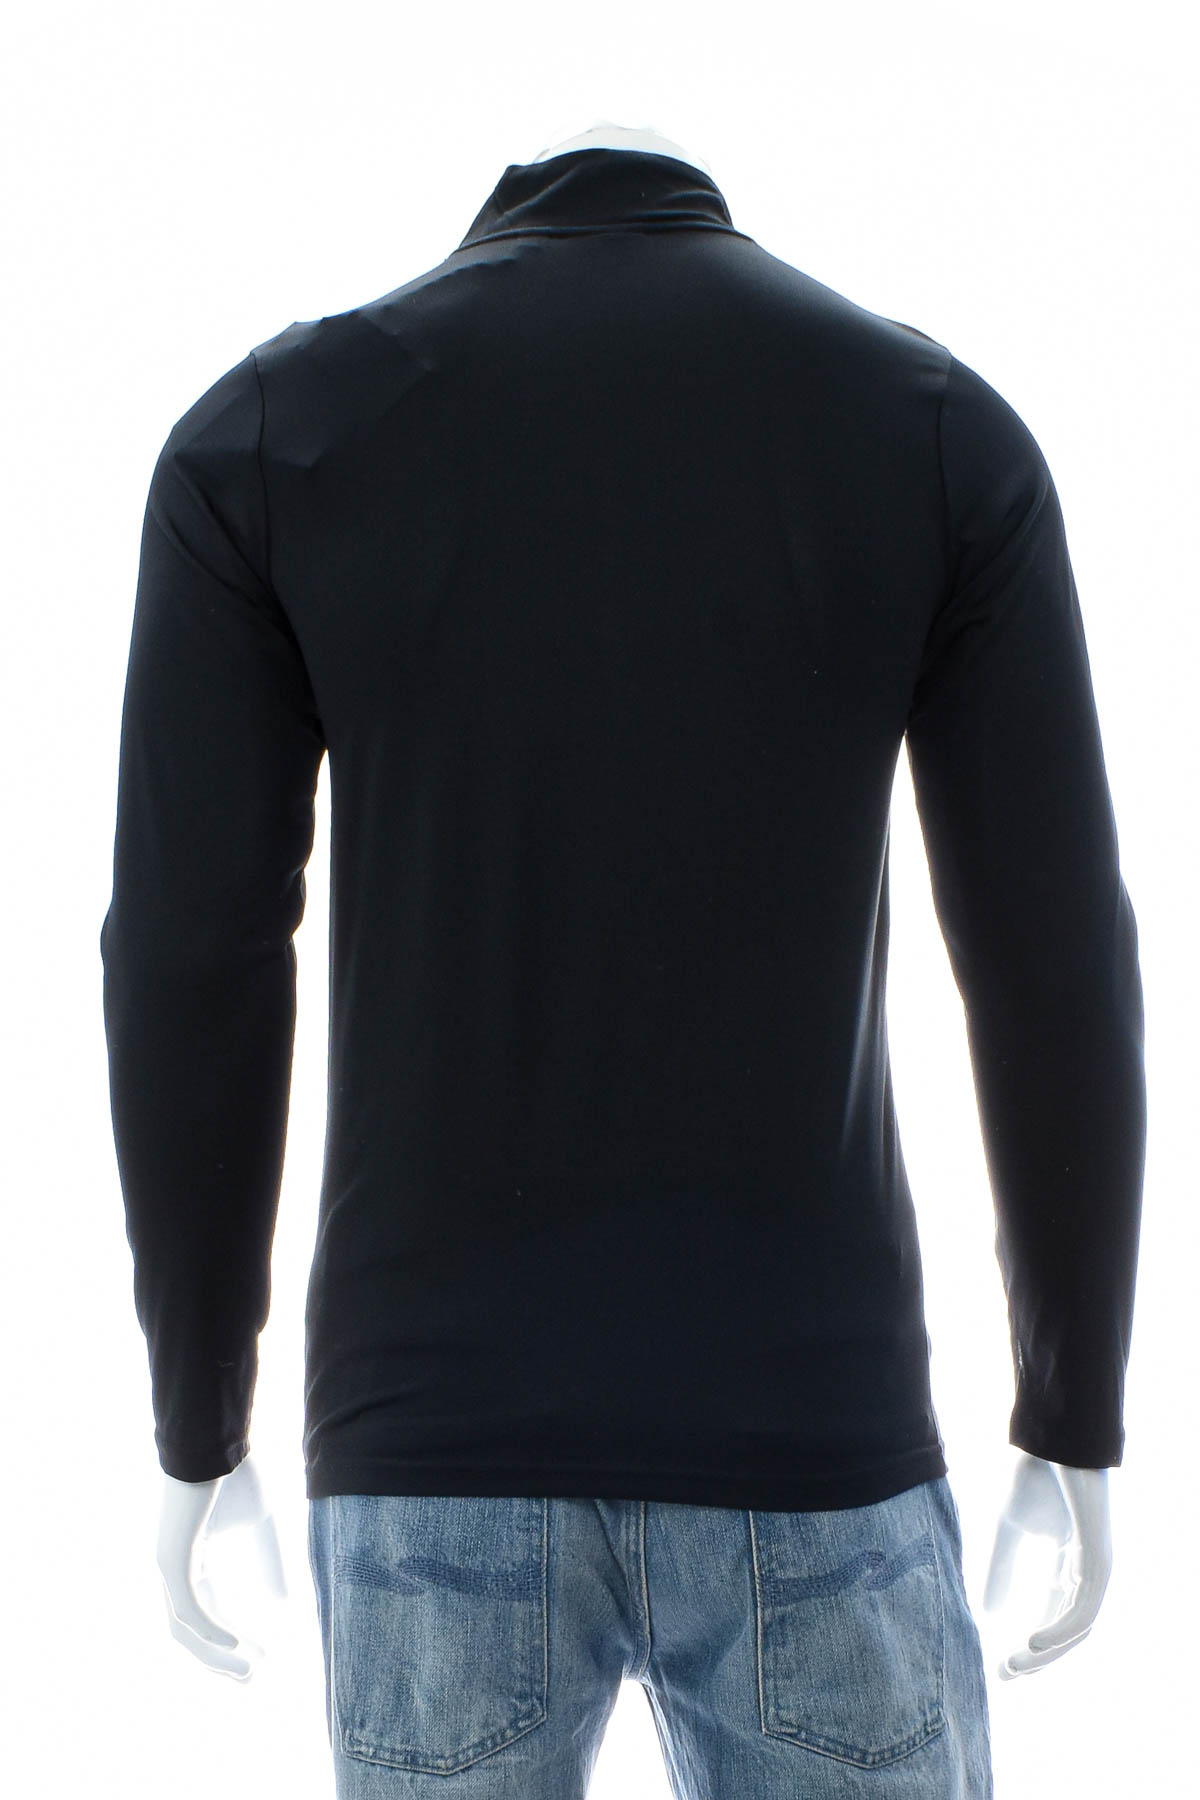 Men's sport blouse - Fila - 1